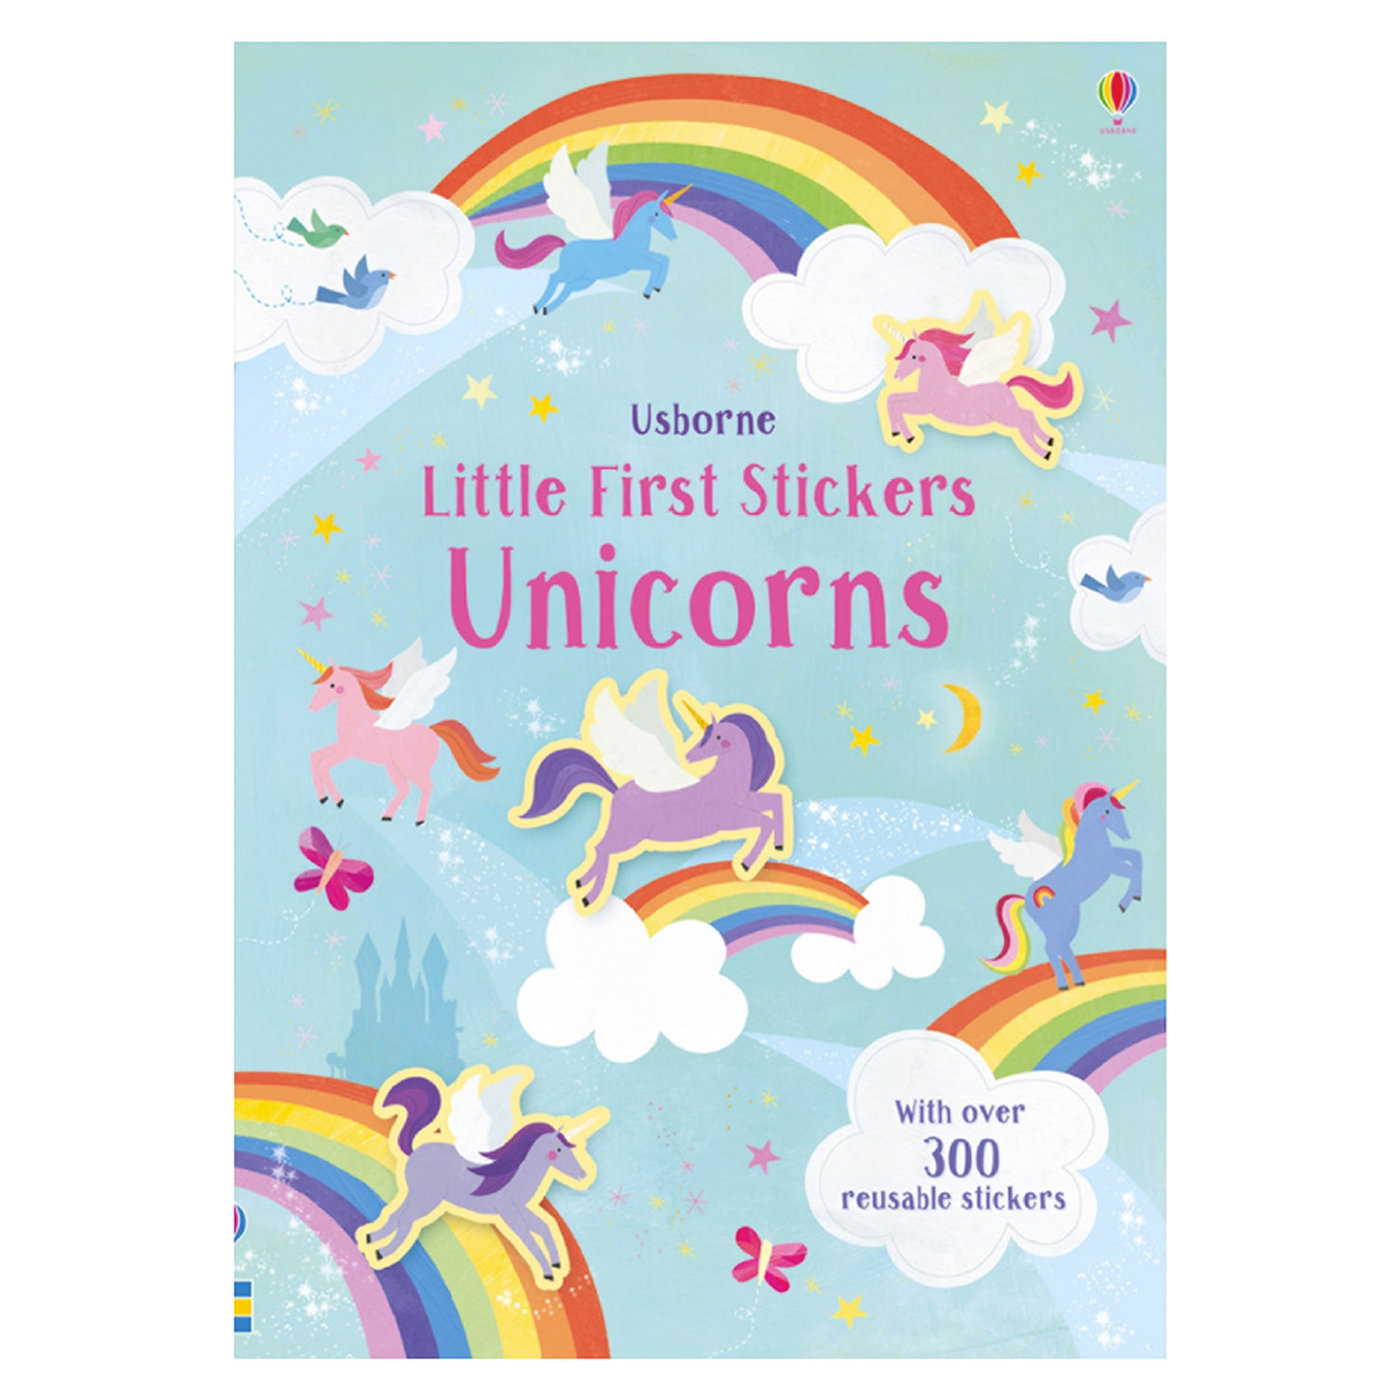  Little First Stickers Unicorns